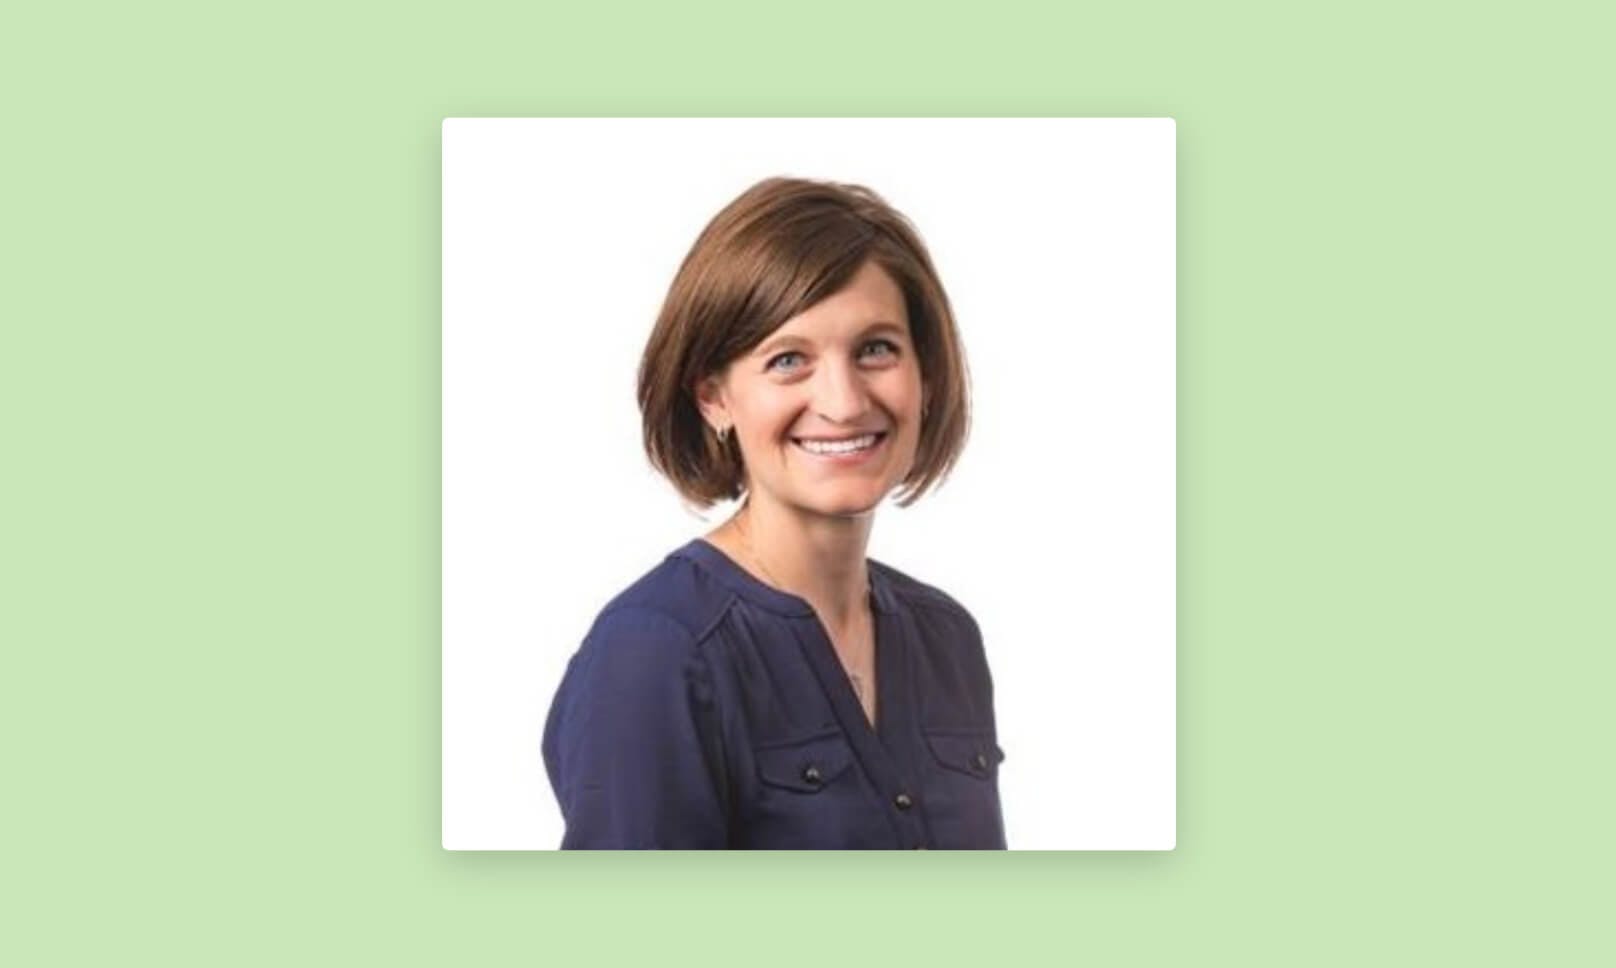 A headshot of Dr. Karen Landmeier against a green background.